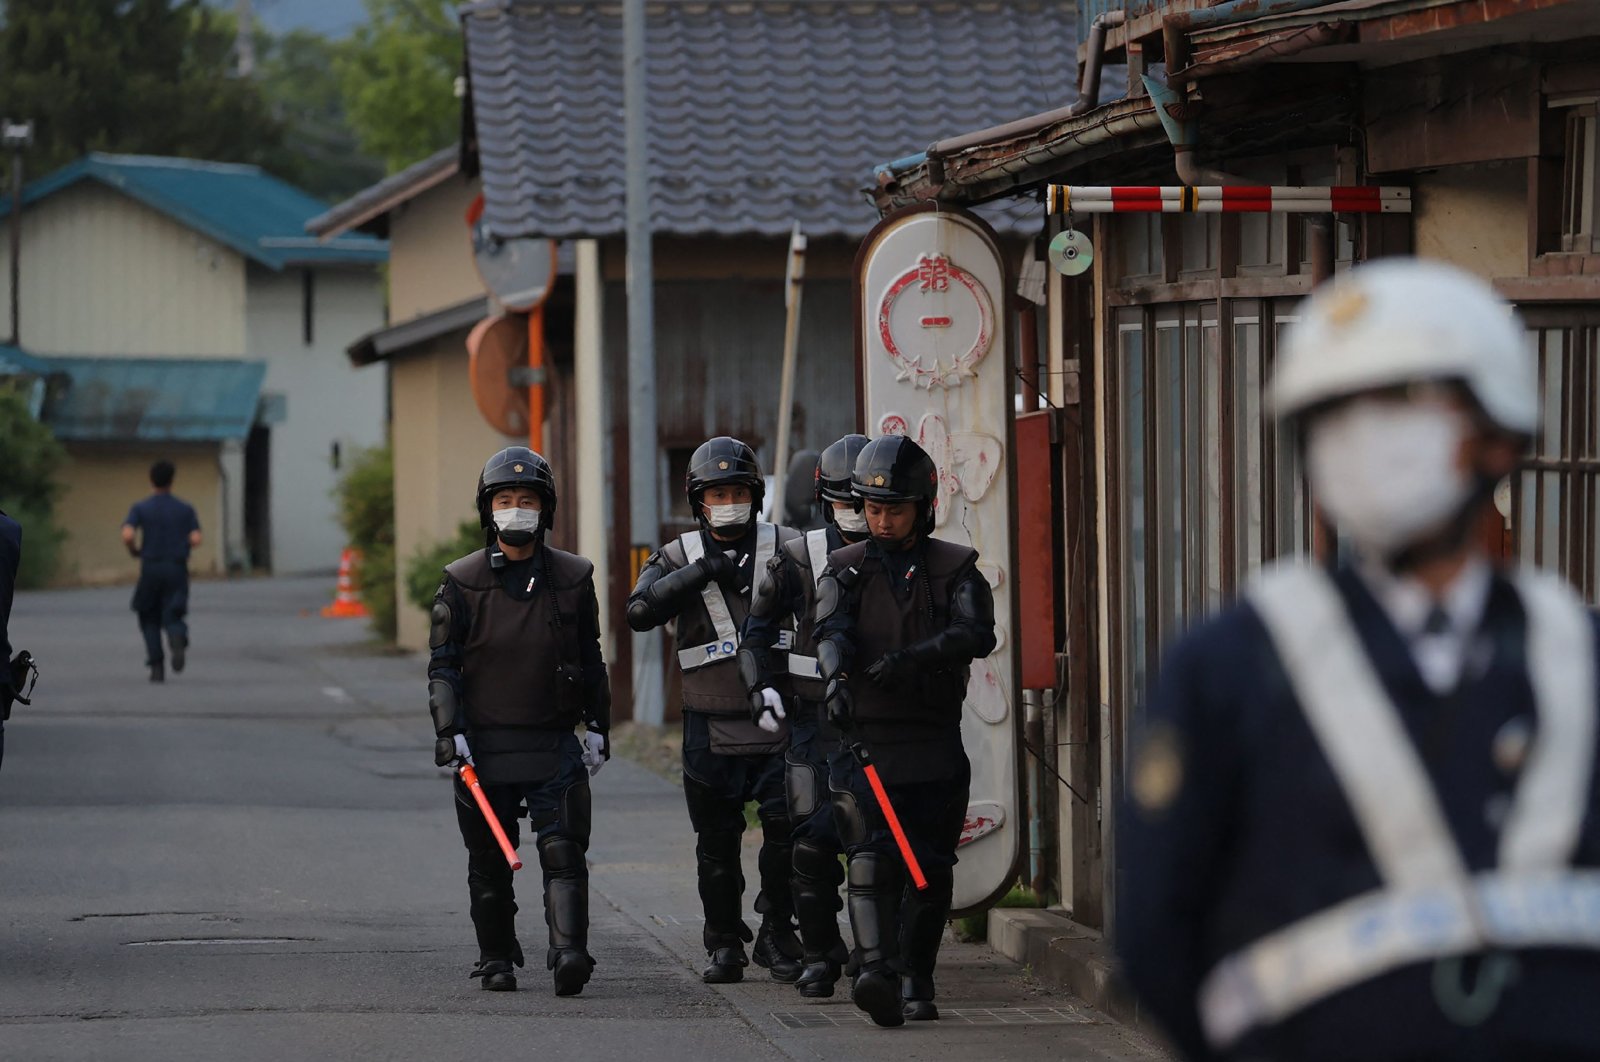 Tersangka ditangkap setelah membunuh 4 orang, termasuk 2 polisi, di Jepang